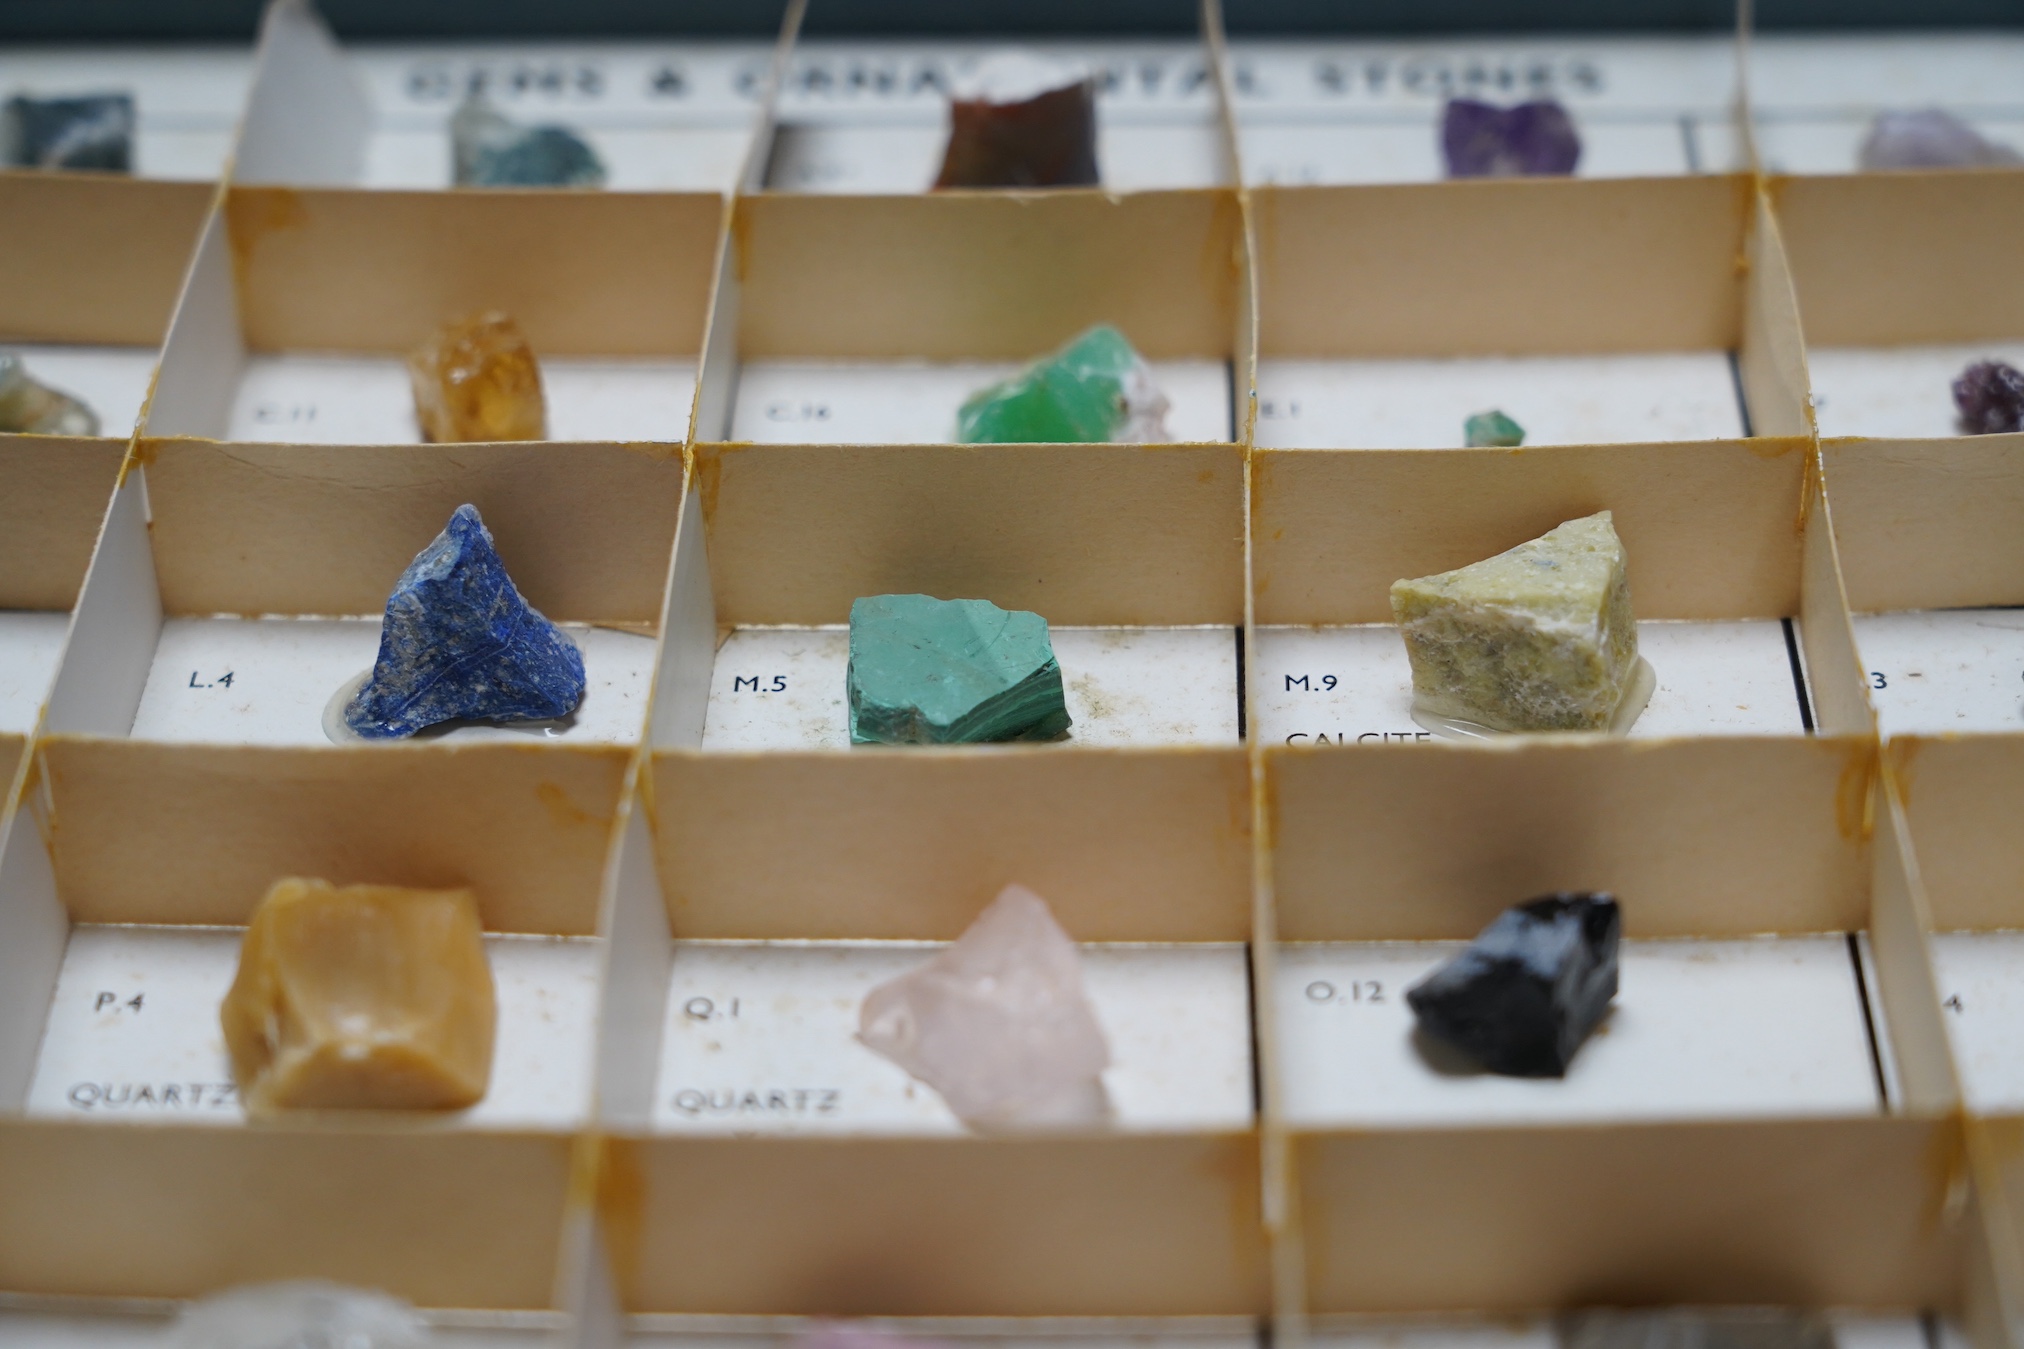 A case of uncut gems and ornamental stones, including diamond, amethyst, nephrite, malachite, rutilated quartz, etc. Fair condition.